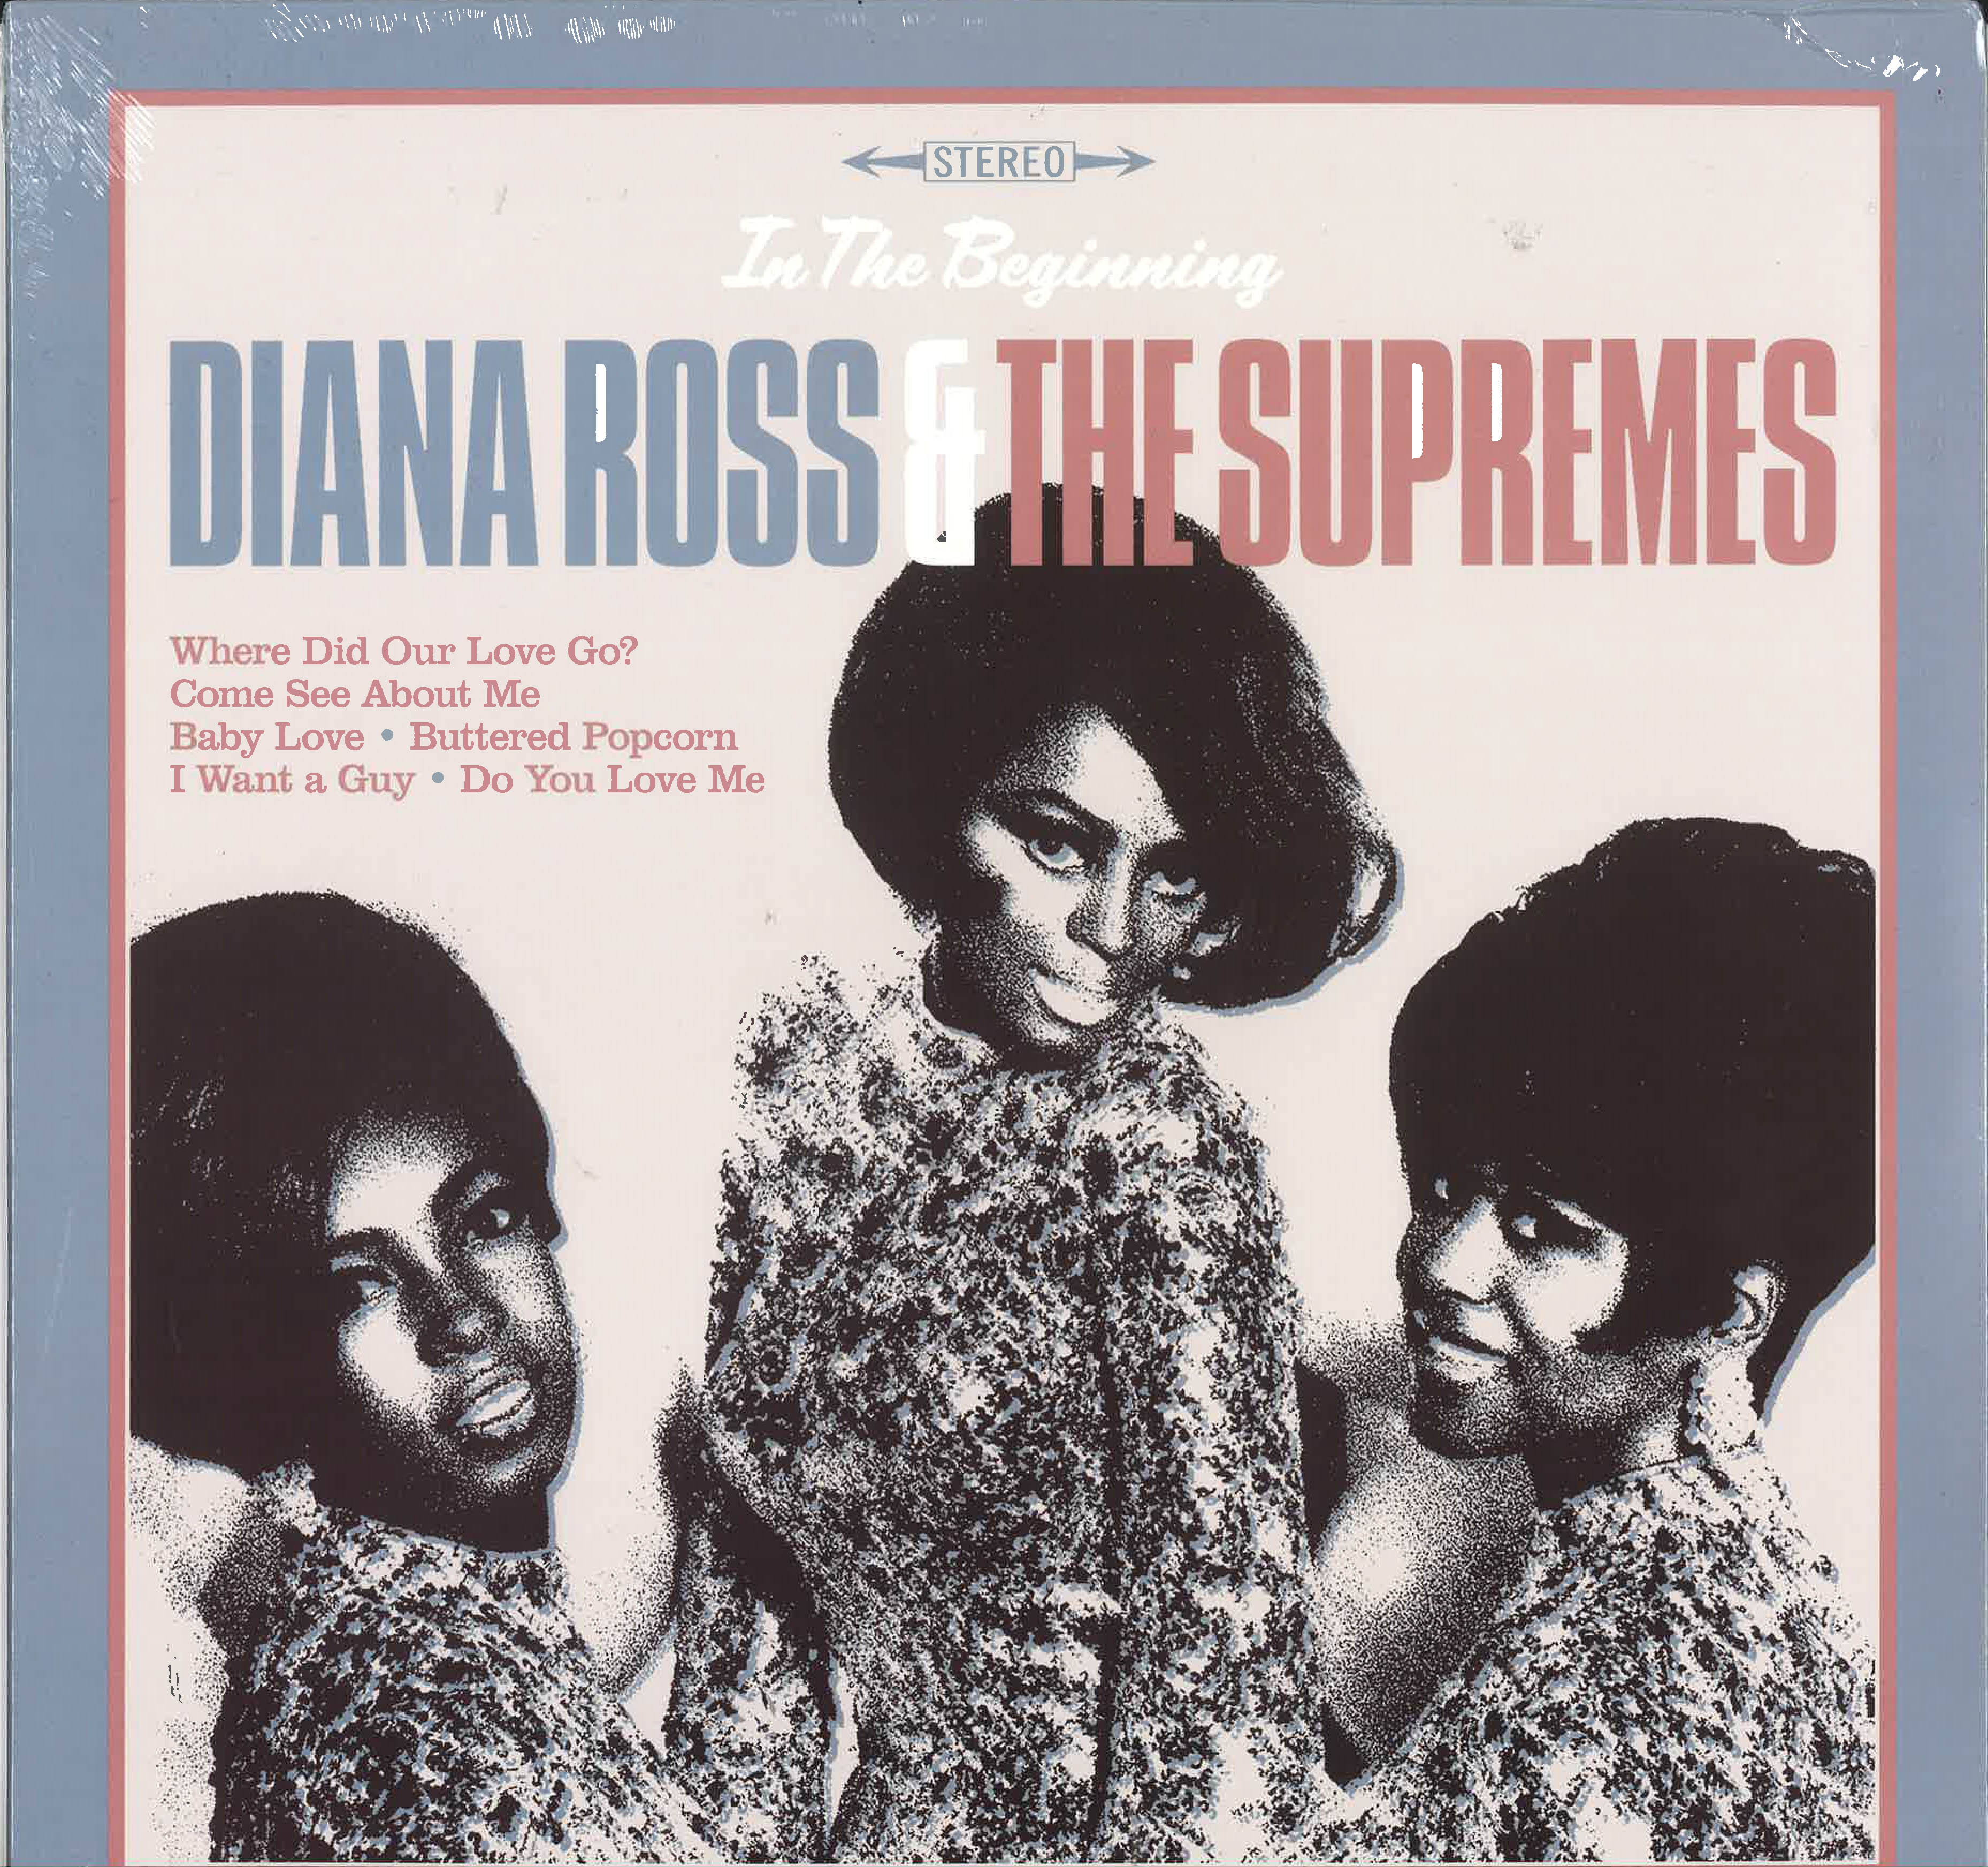 SUPREMES (Diana Ross & The) (ダイアナ・ロス & ザ・スプリームス